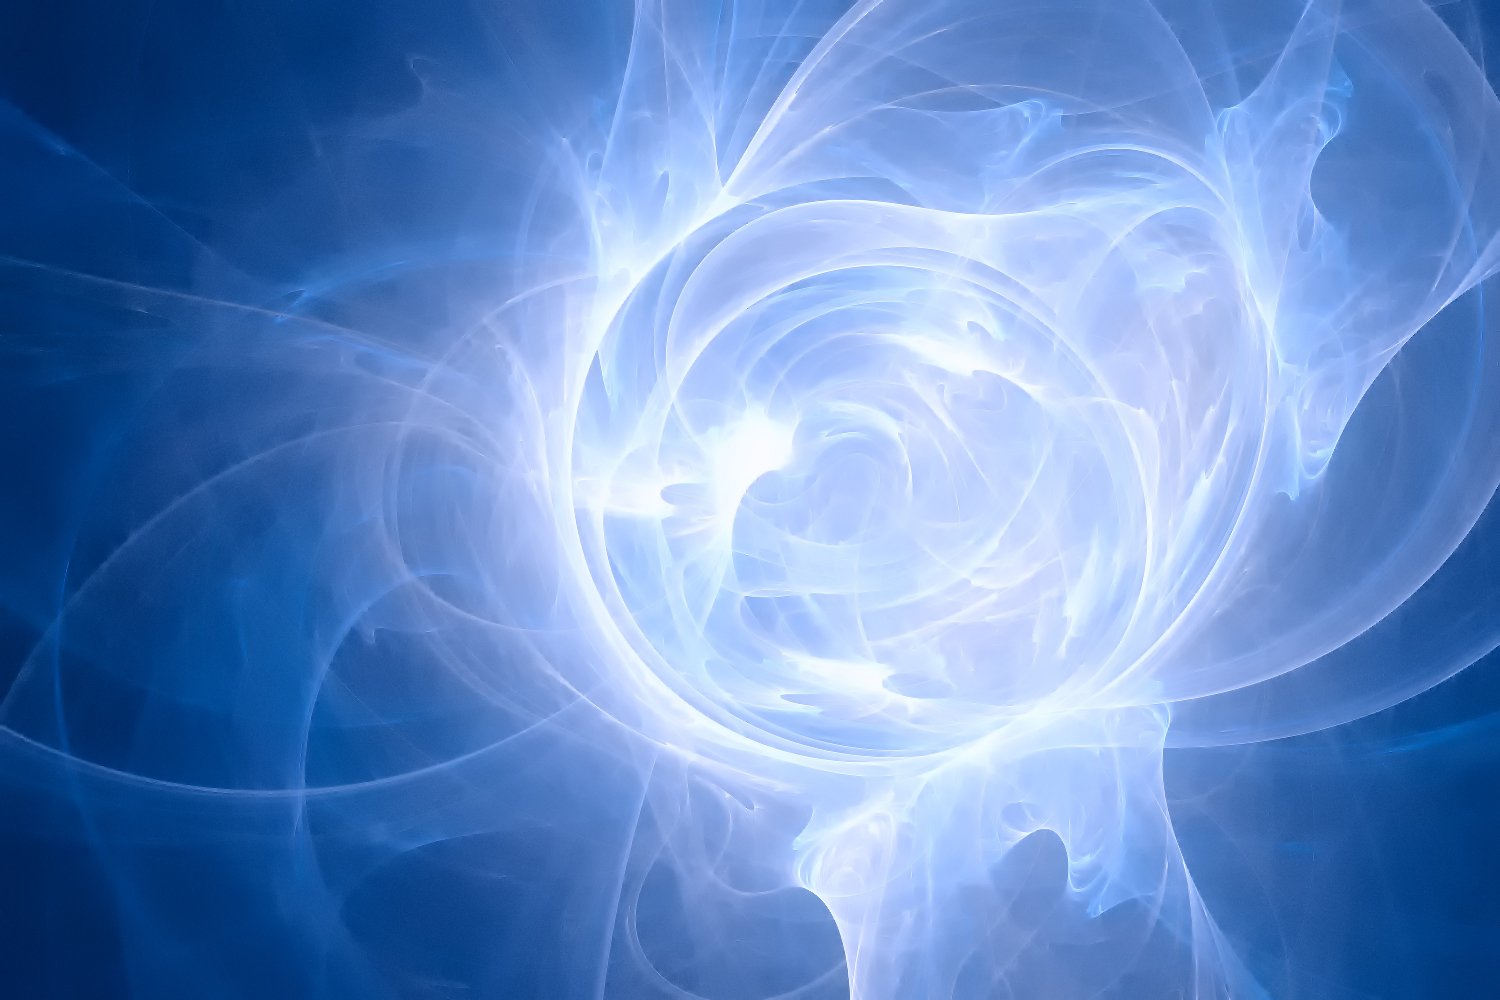 a colorful, swirl - like object with blue streaks